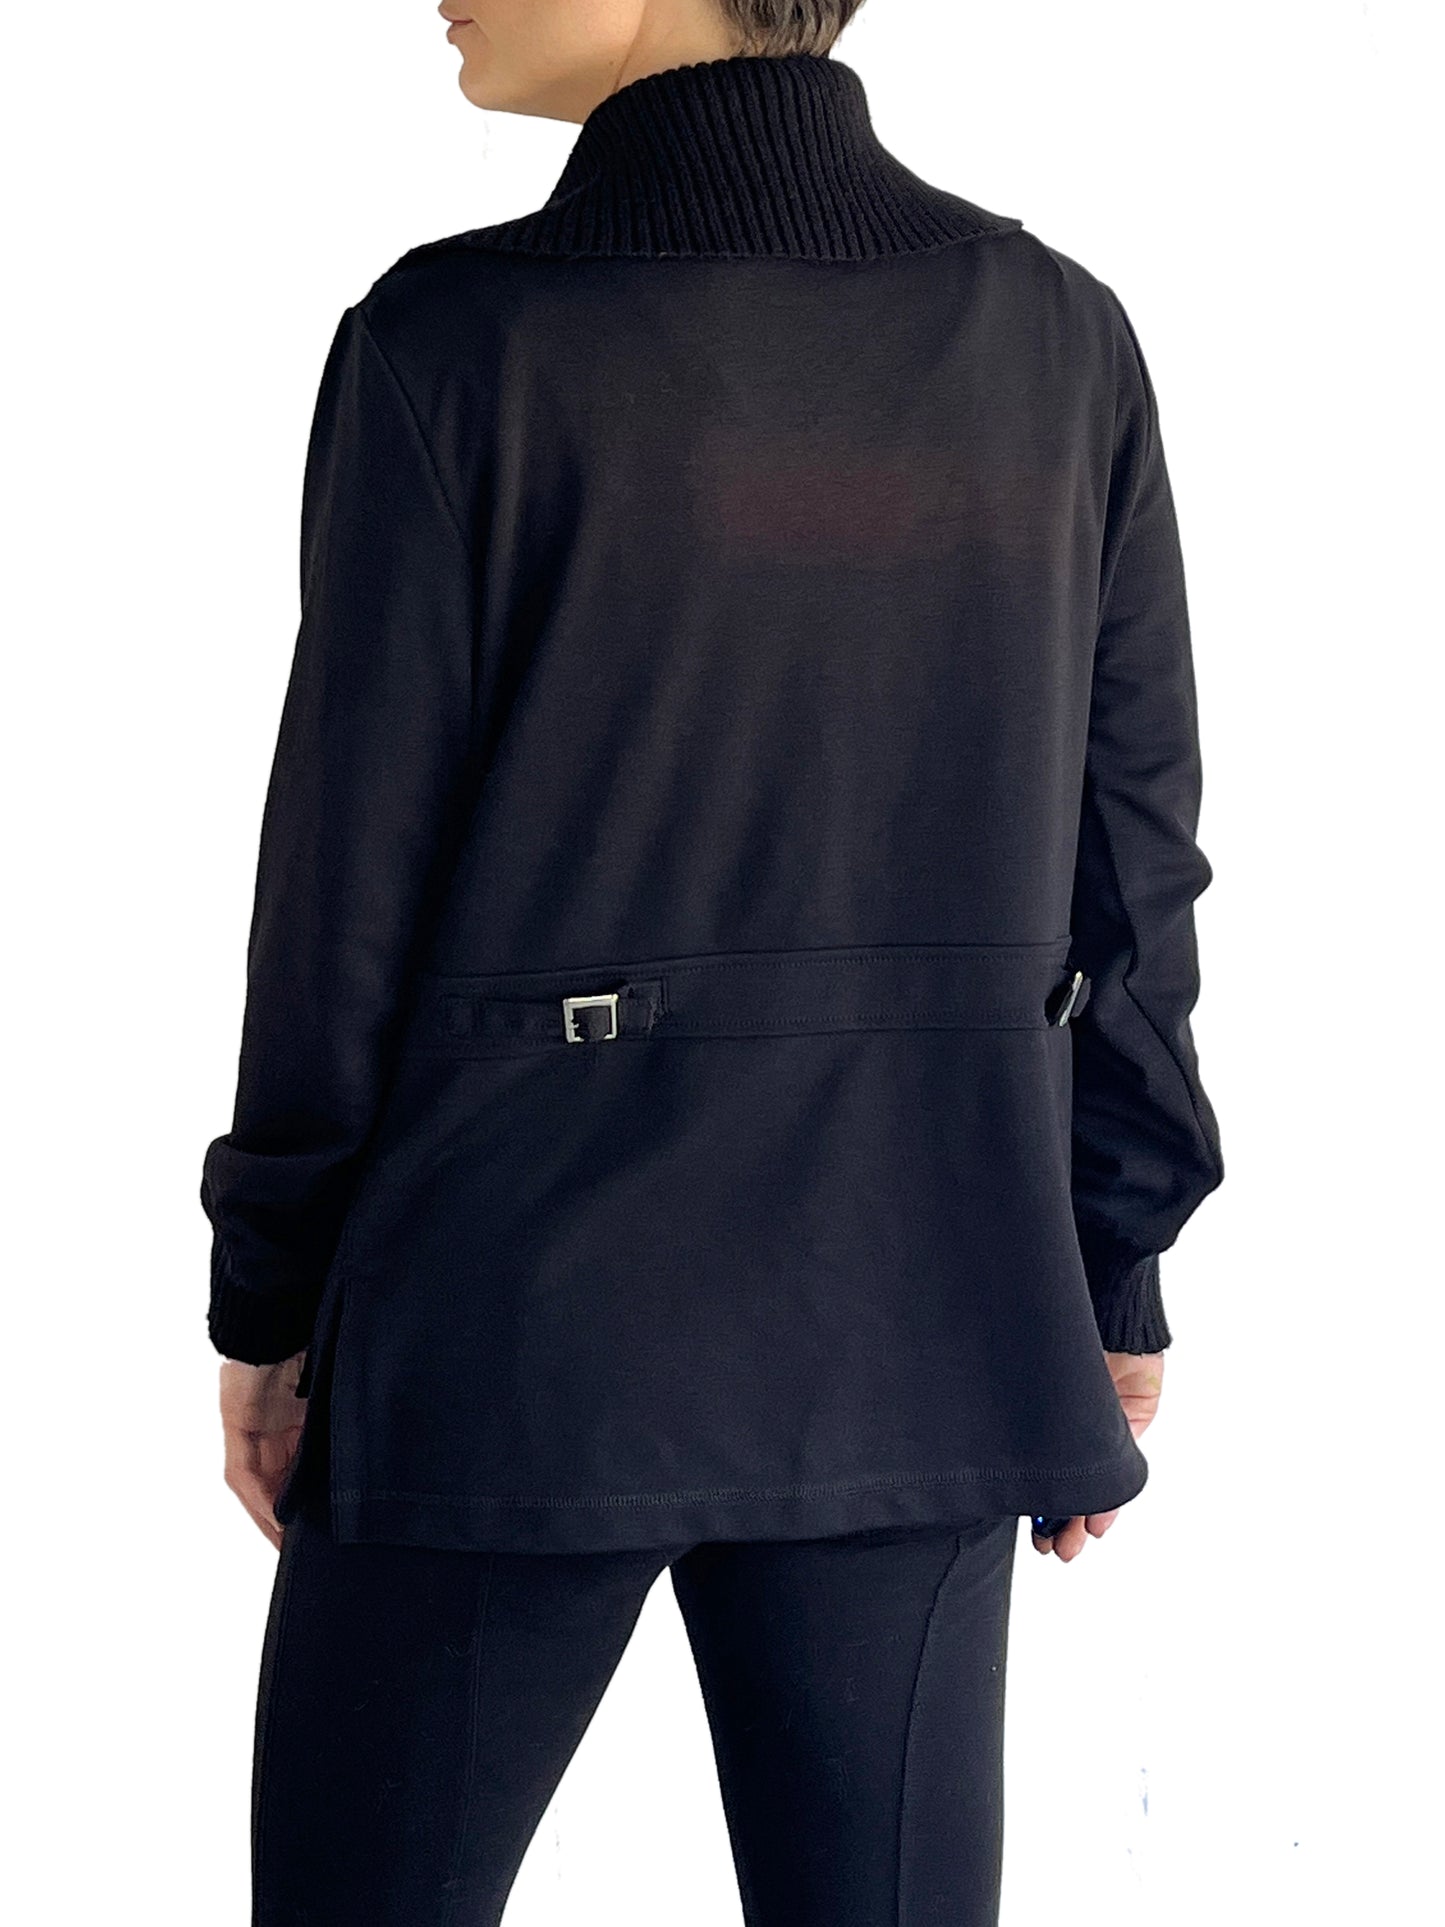 Aline Top Sweater Black Size M SKU 000049